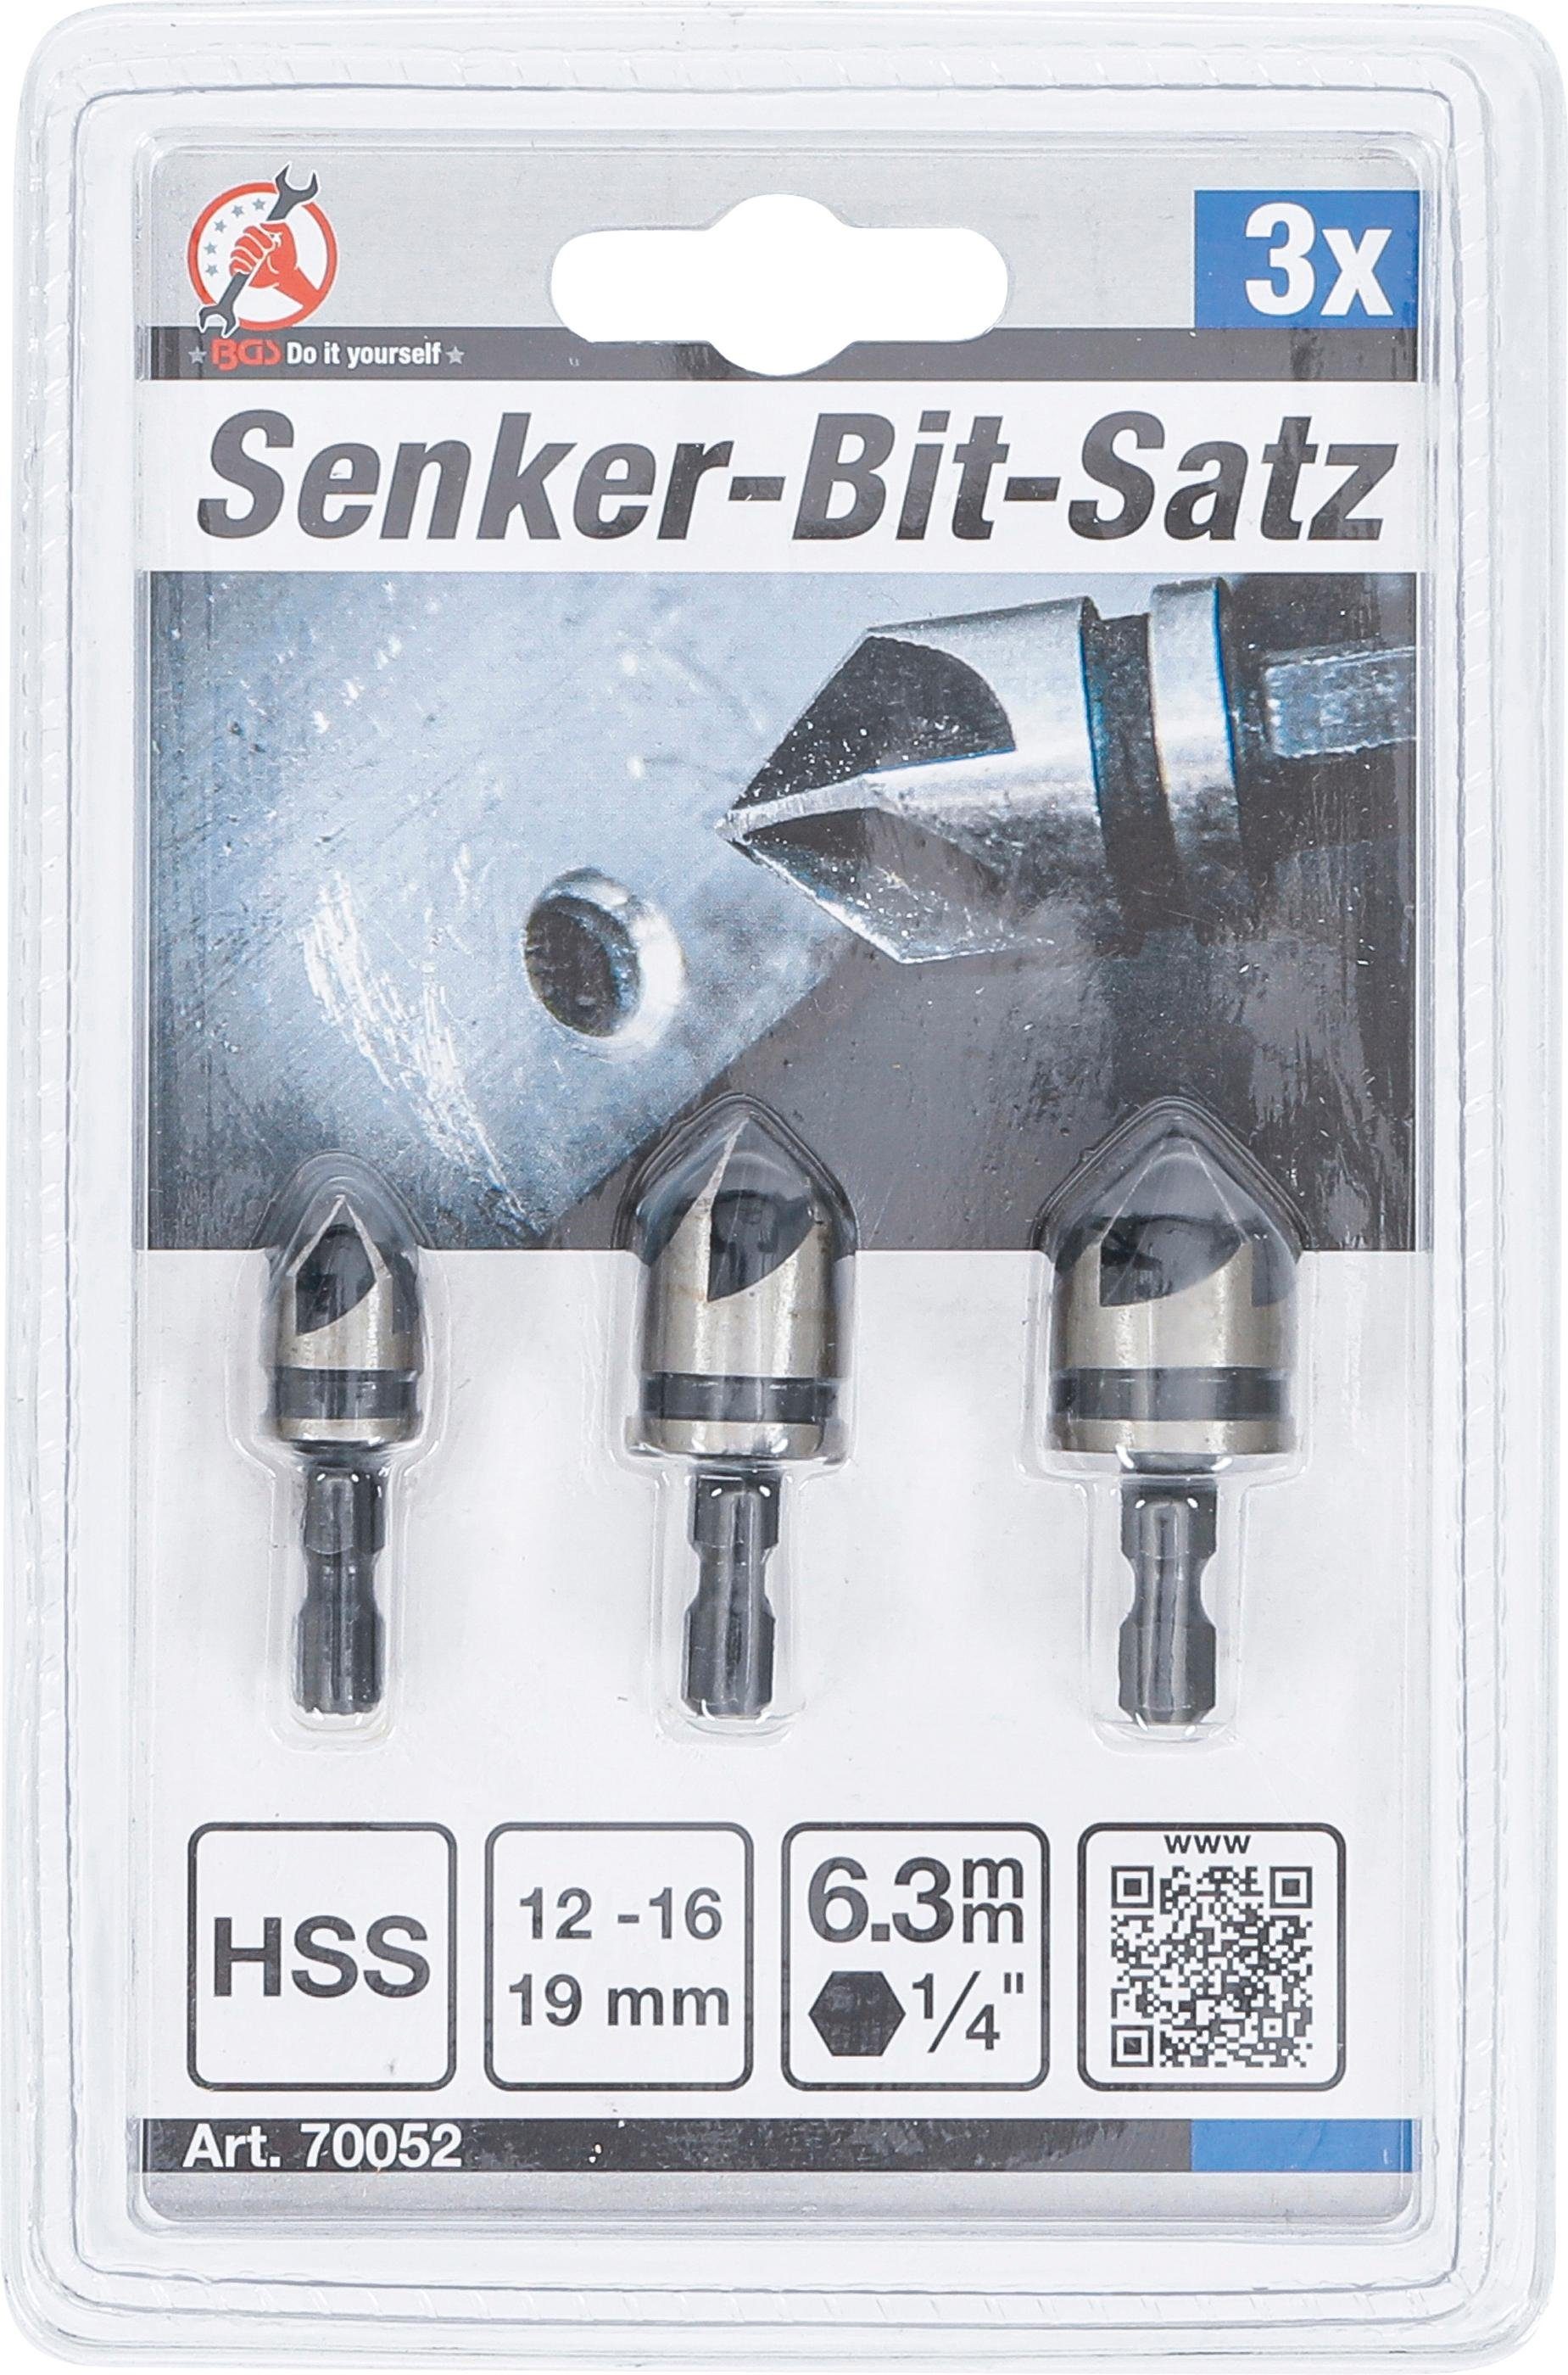 BGS technic Spiralbohrer Senker-Bit-Satz, HSS, 19 (1/4), 12 mm, 3-tlg. Antrieb - - 6,3 mm 16